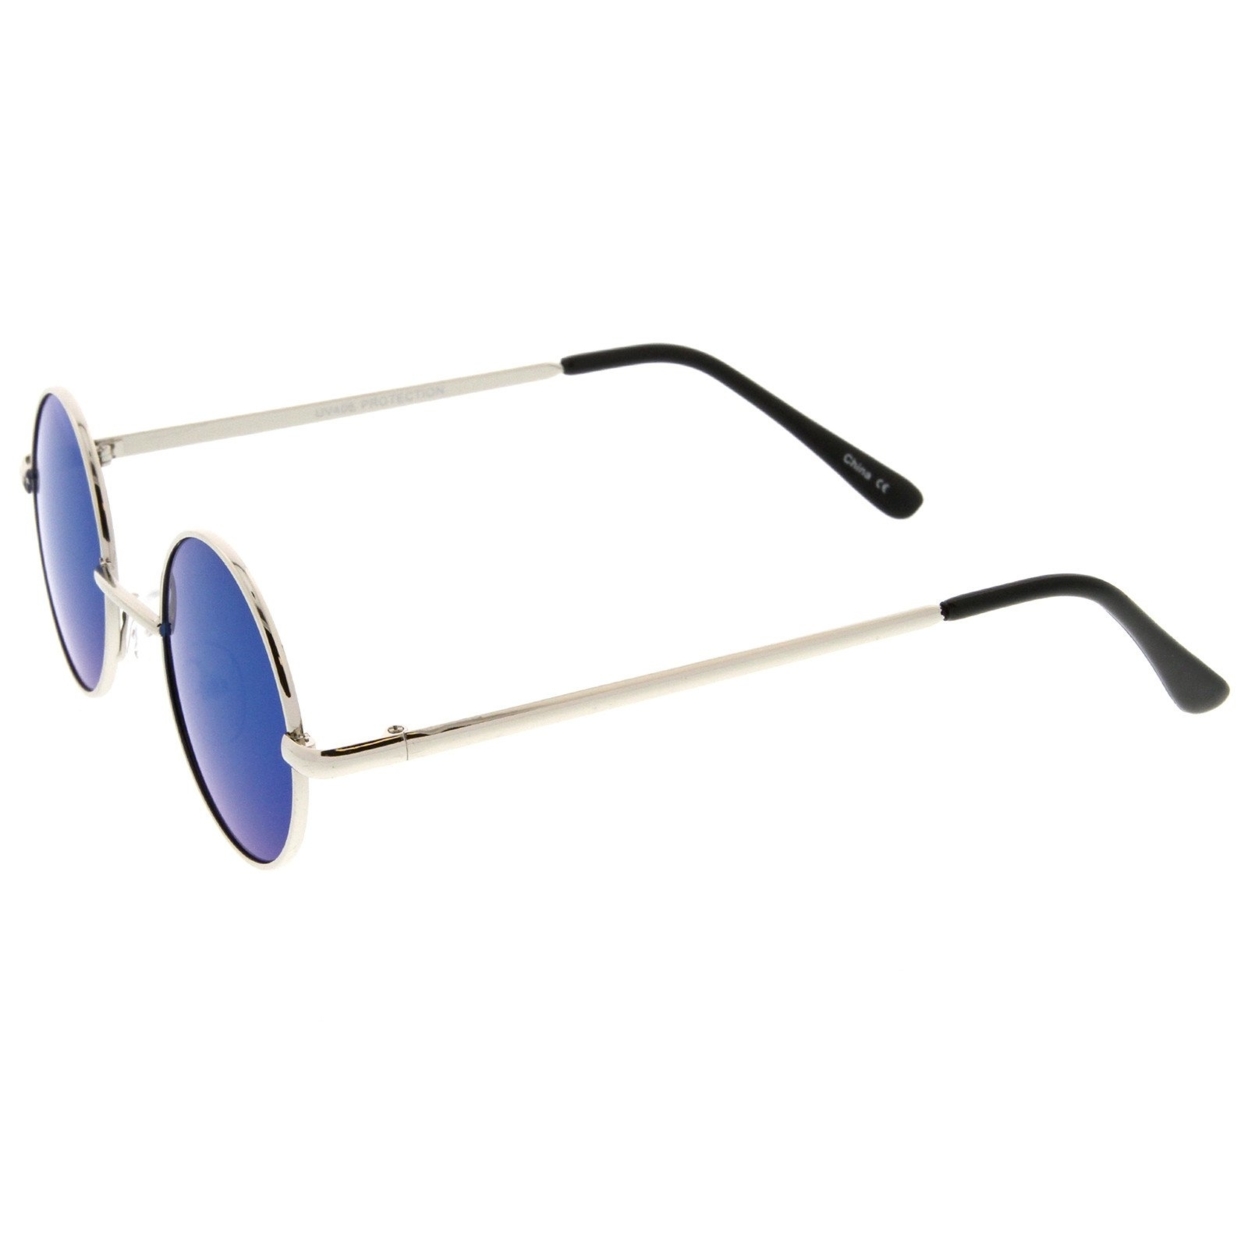 Small Retro Lennon Style Colored Mirror Lens Round Metal Sunglasses 41mm - Silver / Yellow Mirror